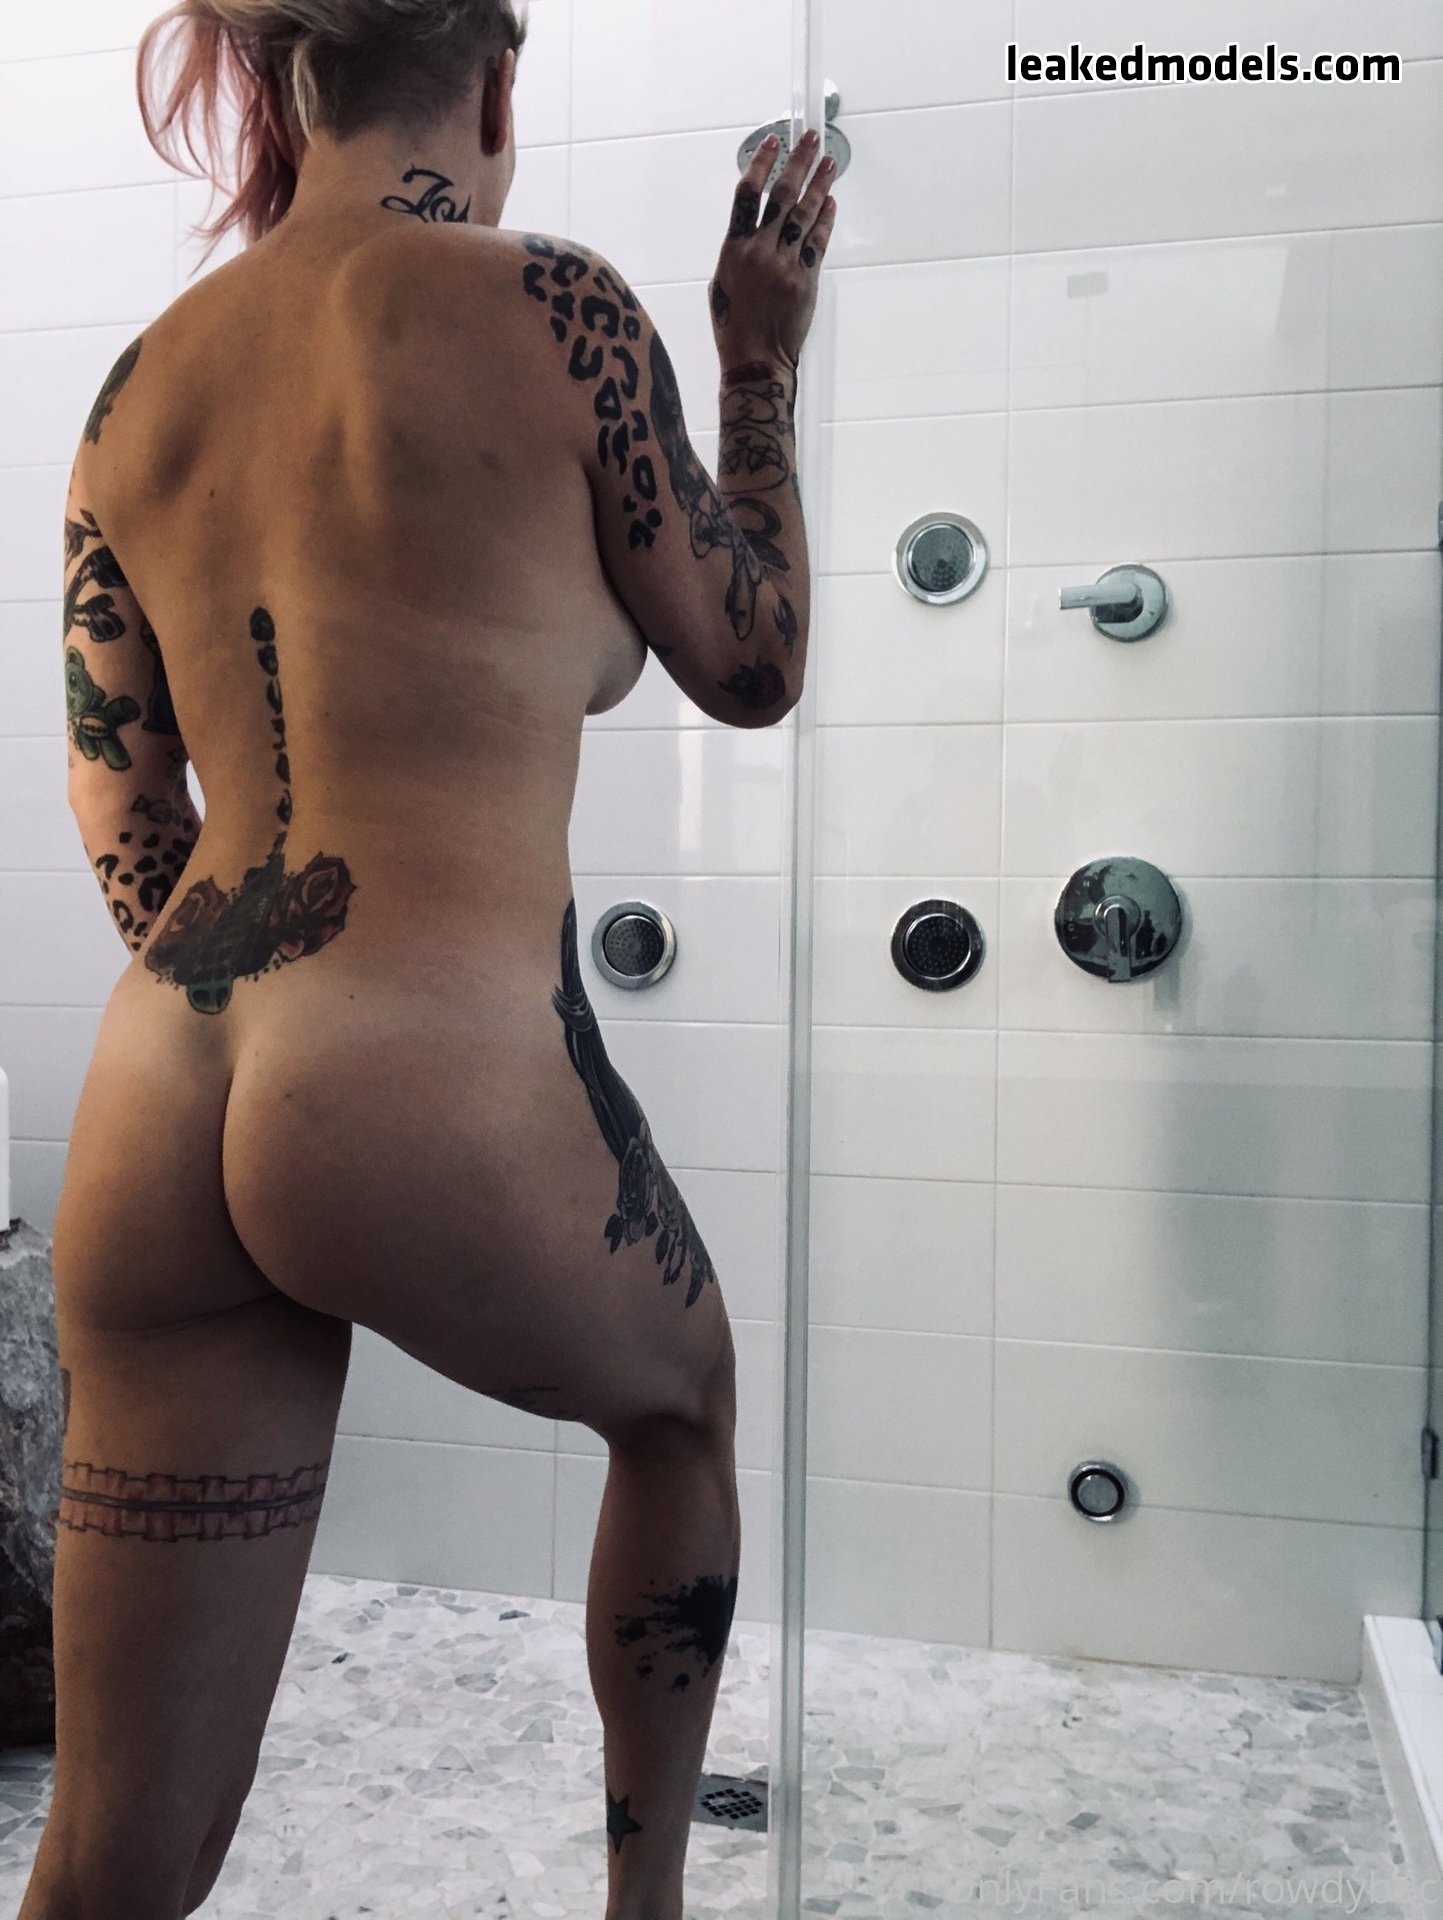 Rowdy Rawlings – rowdybec OnlyFans Nude Leaks (43 Photos)